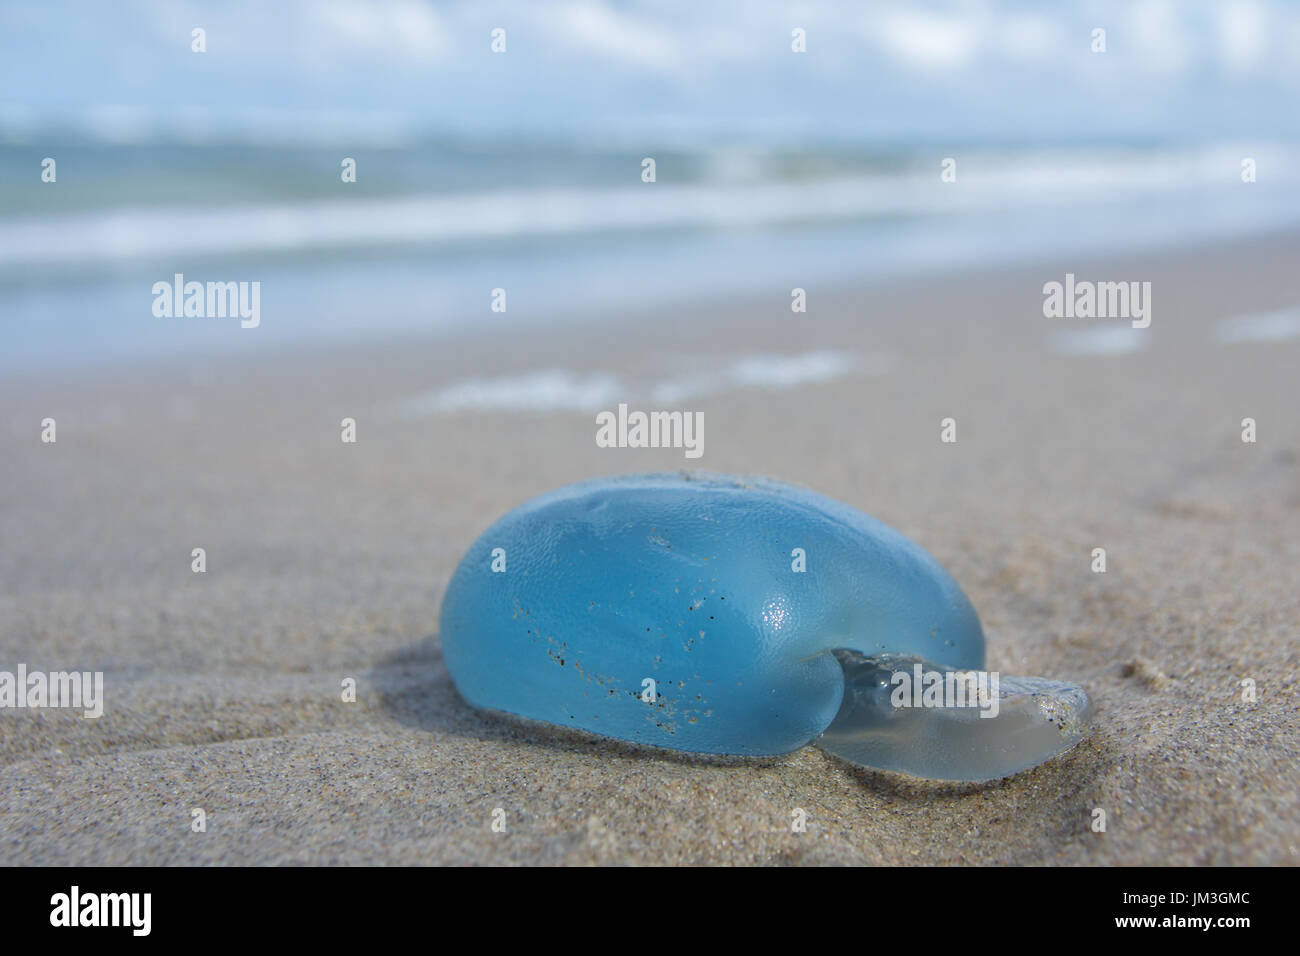 blue barrel jellyfish washed up on Kijkduin beach, The Hague, the Netherlands Stock Photo